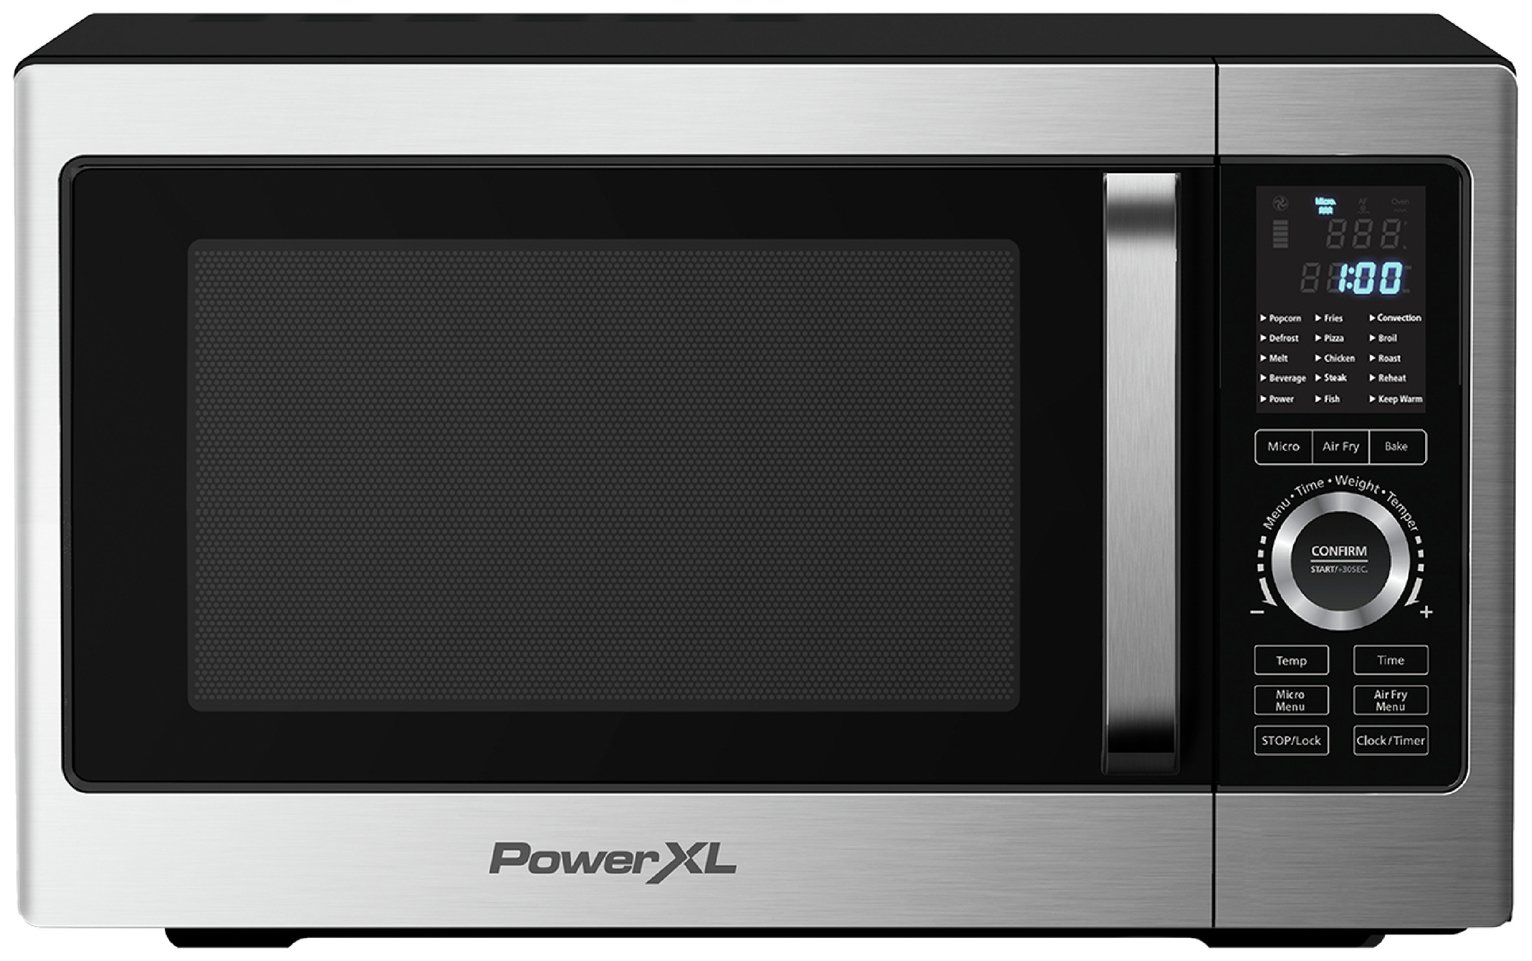 Power XL 900W Microwave Air Fryer 01556 - Black